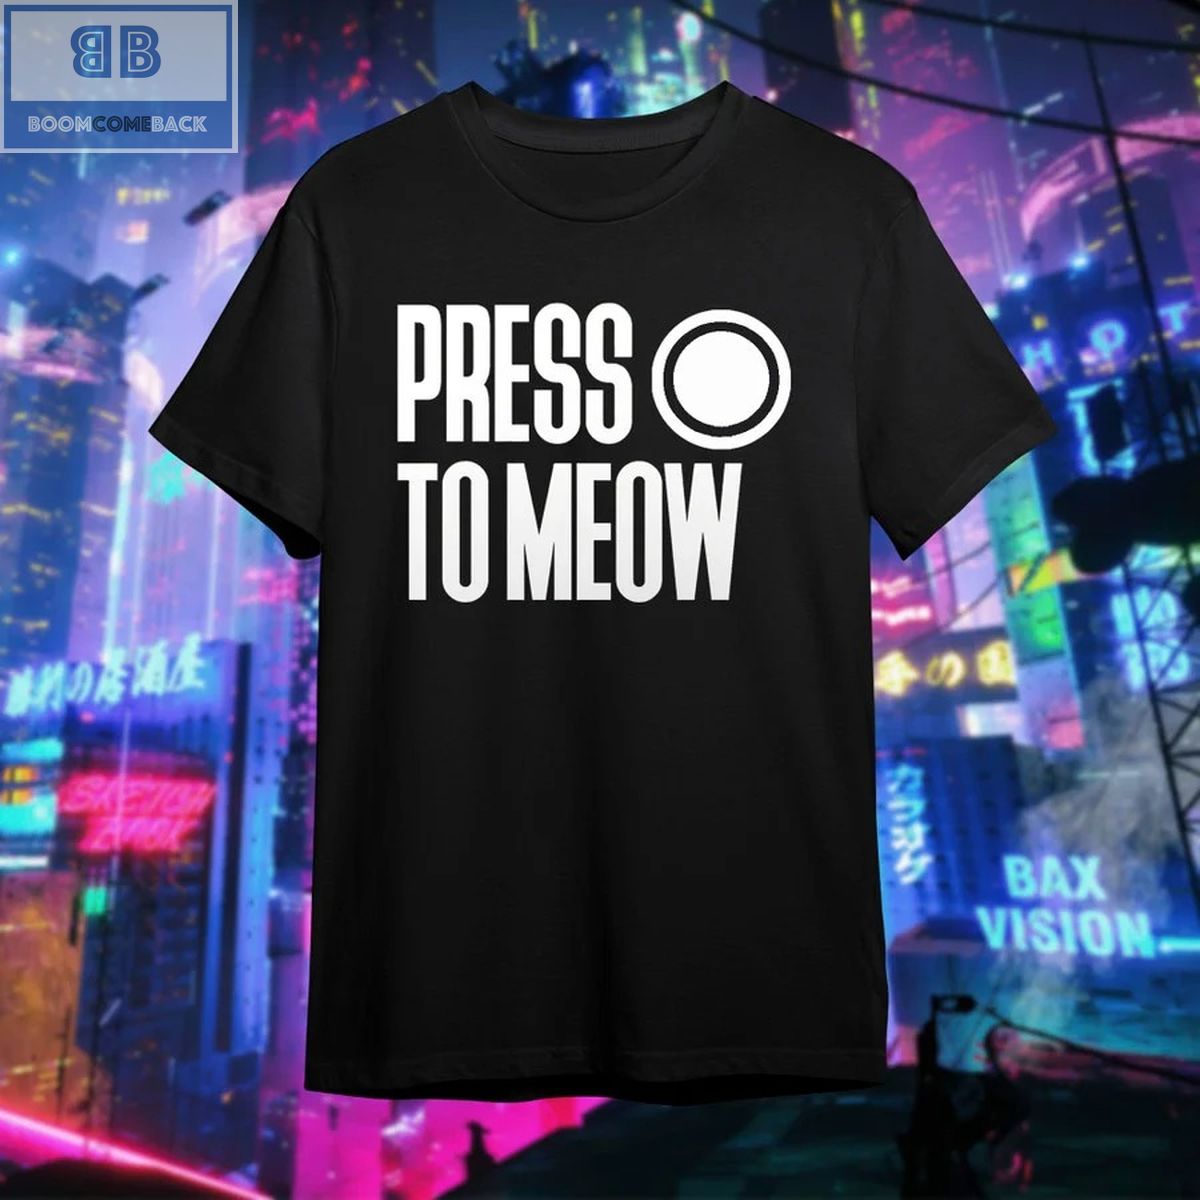 Press O To Meow Shirt